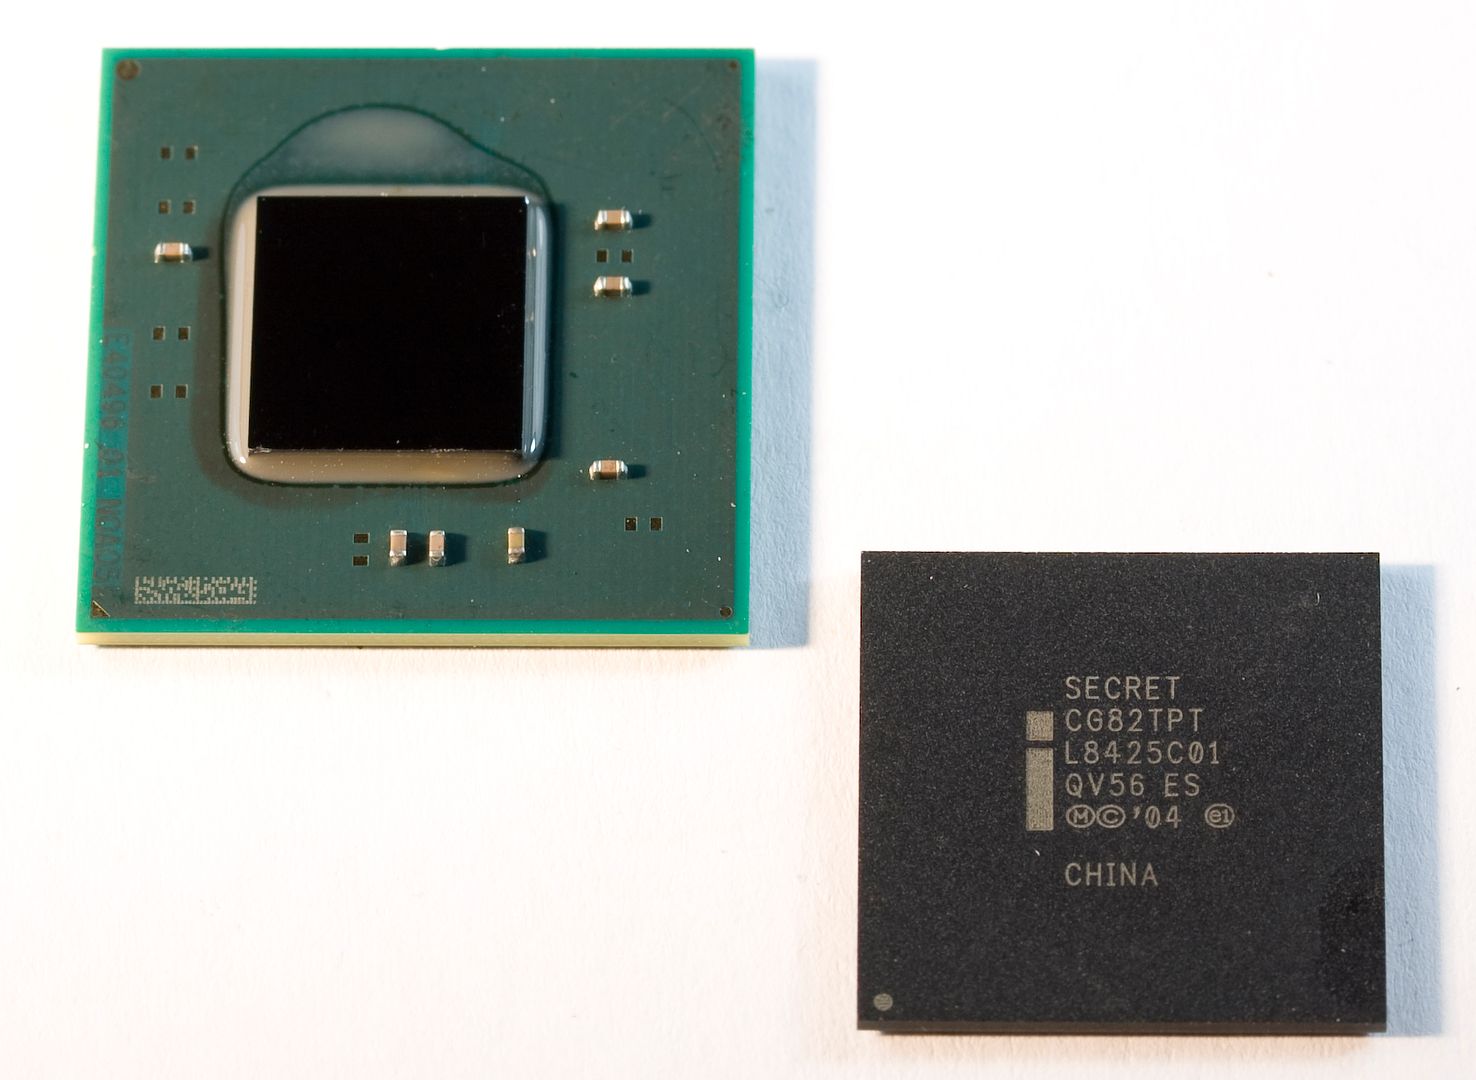 Intel dual-core Atom processor